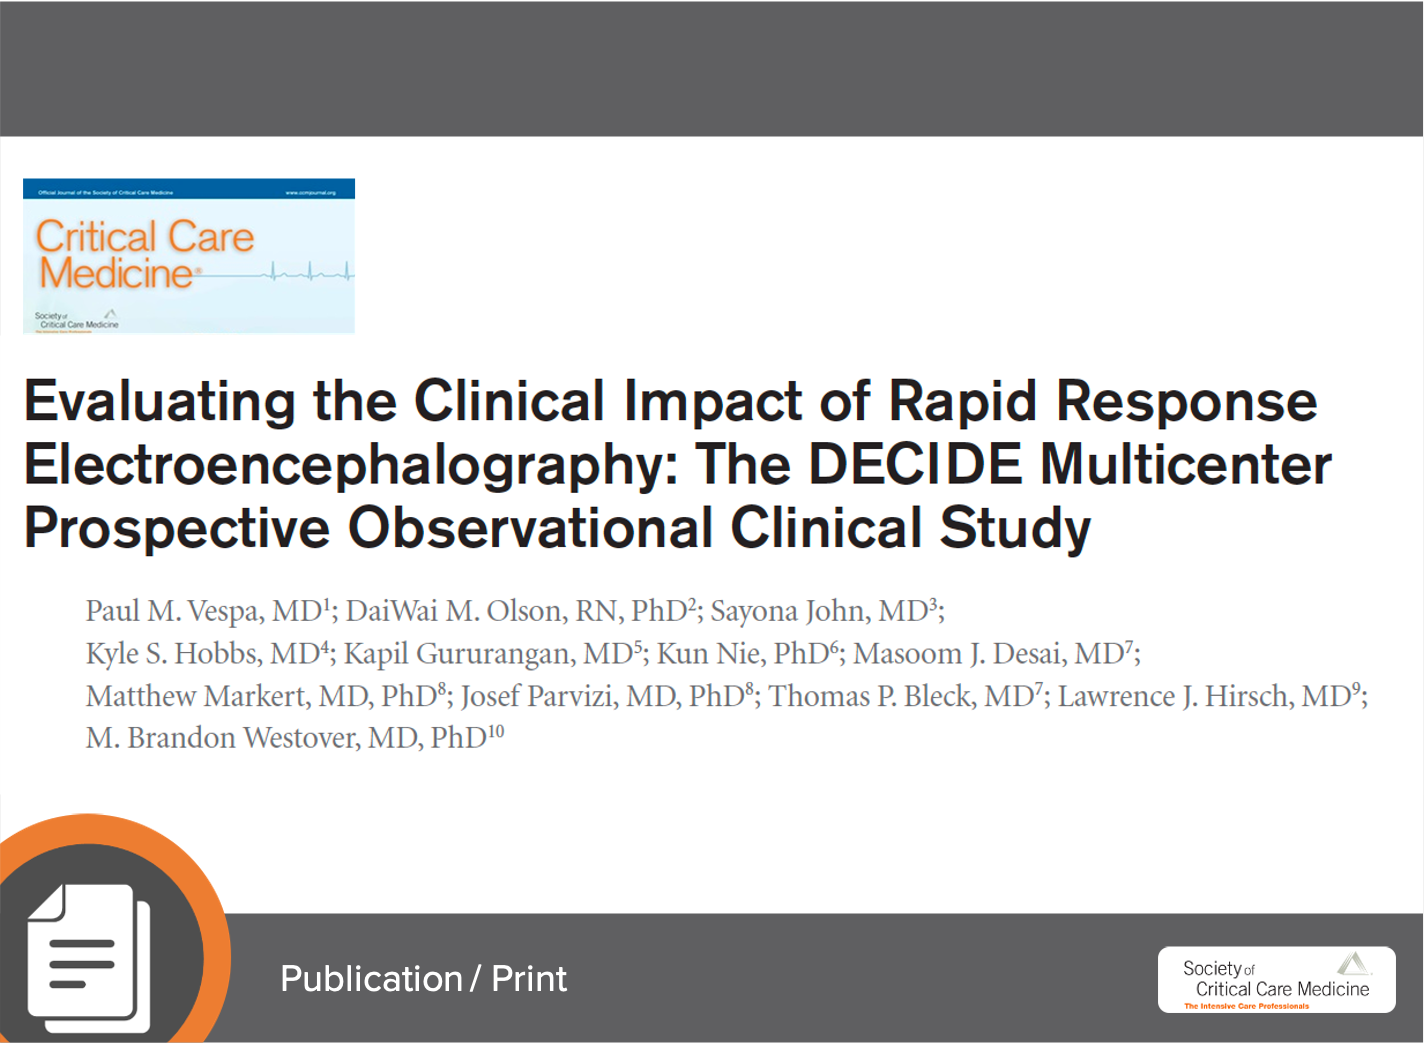 DECIDE Study Manuscript: Assessing The Impact of Ceribell Rapid Response EEG